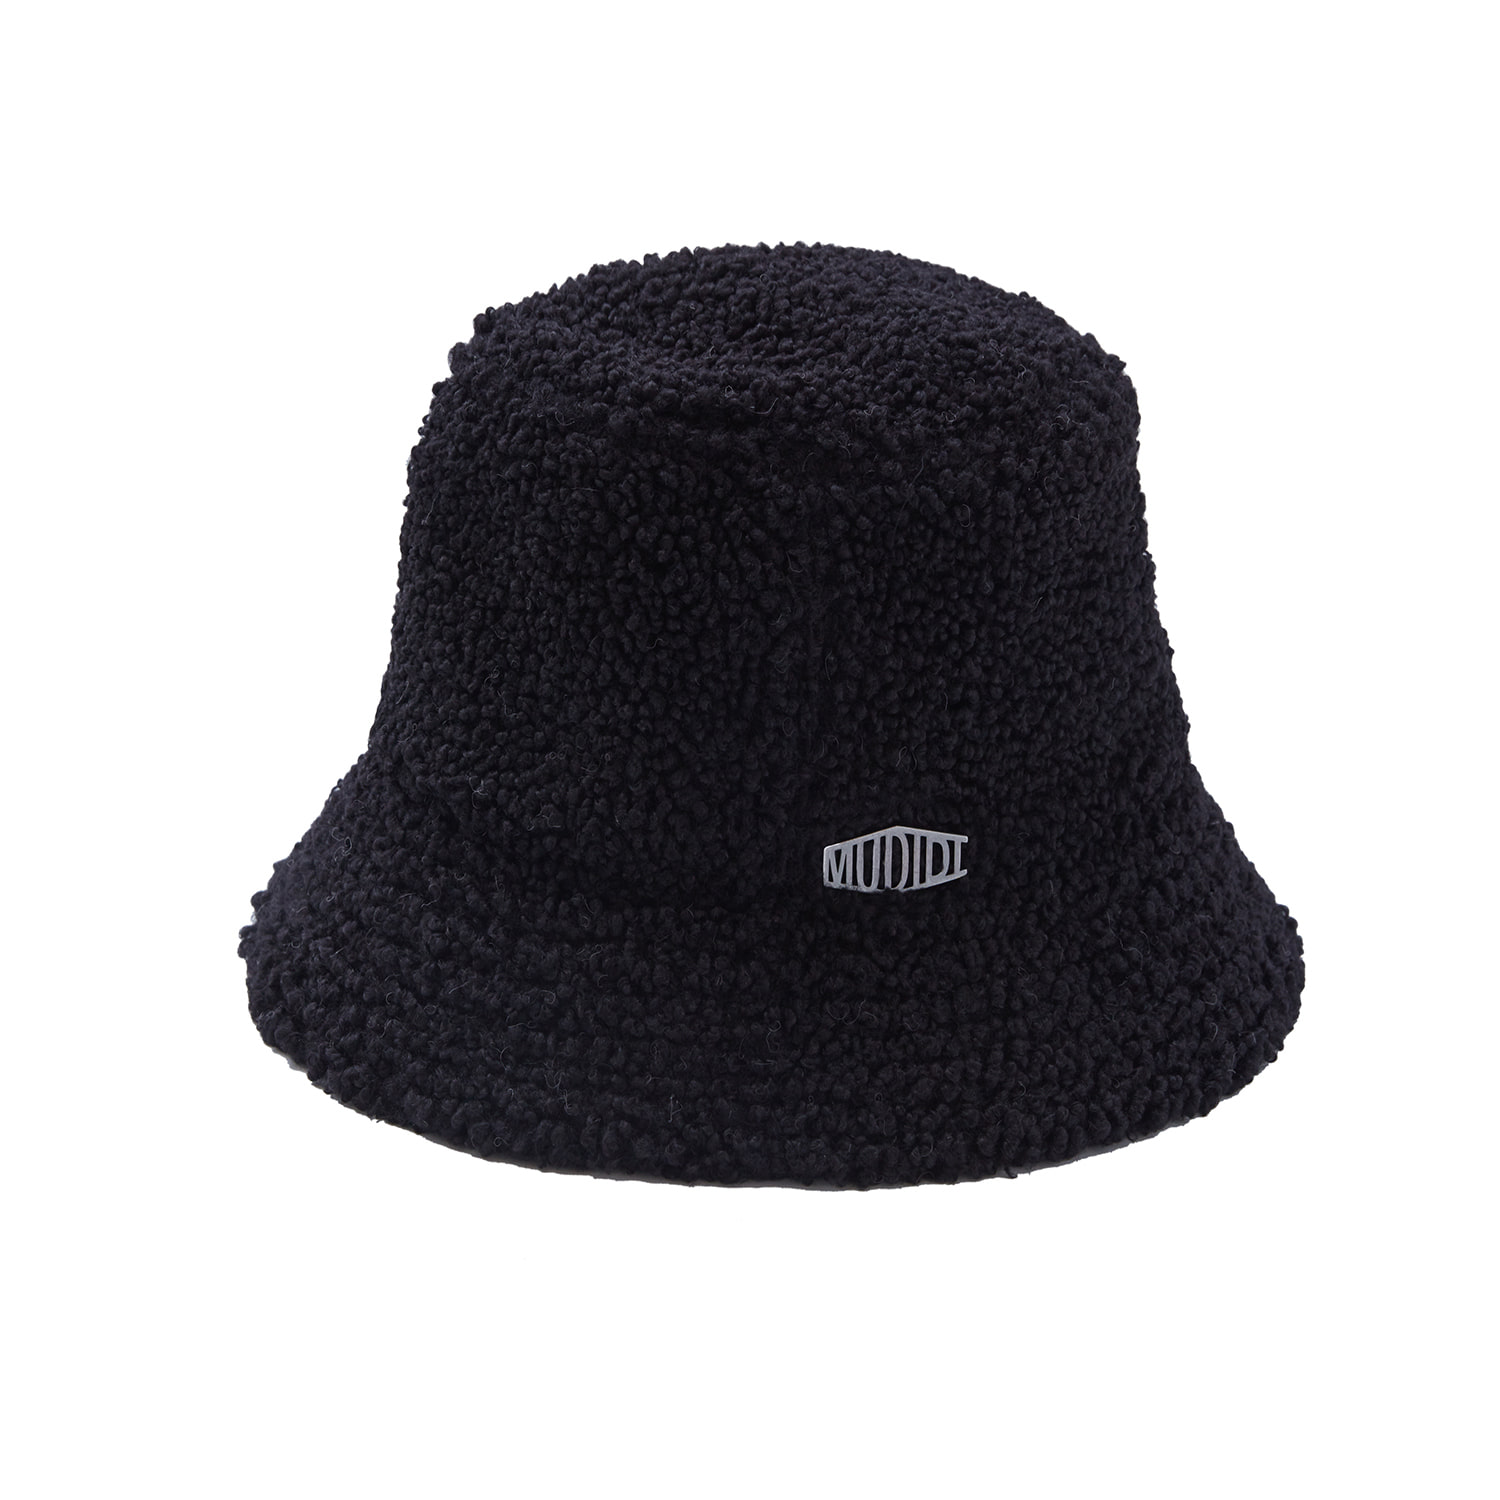 Mudidi Teddy bucket hat 002 Black